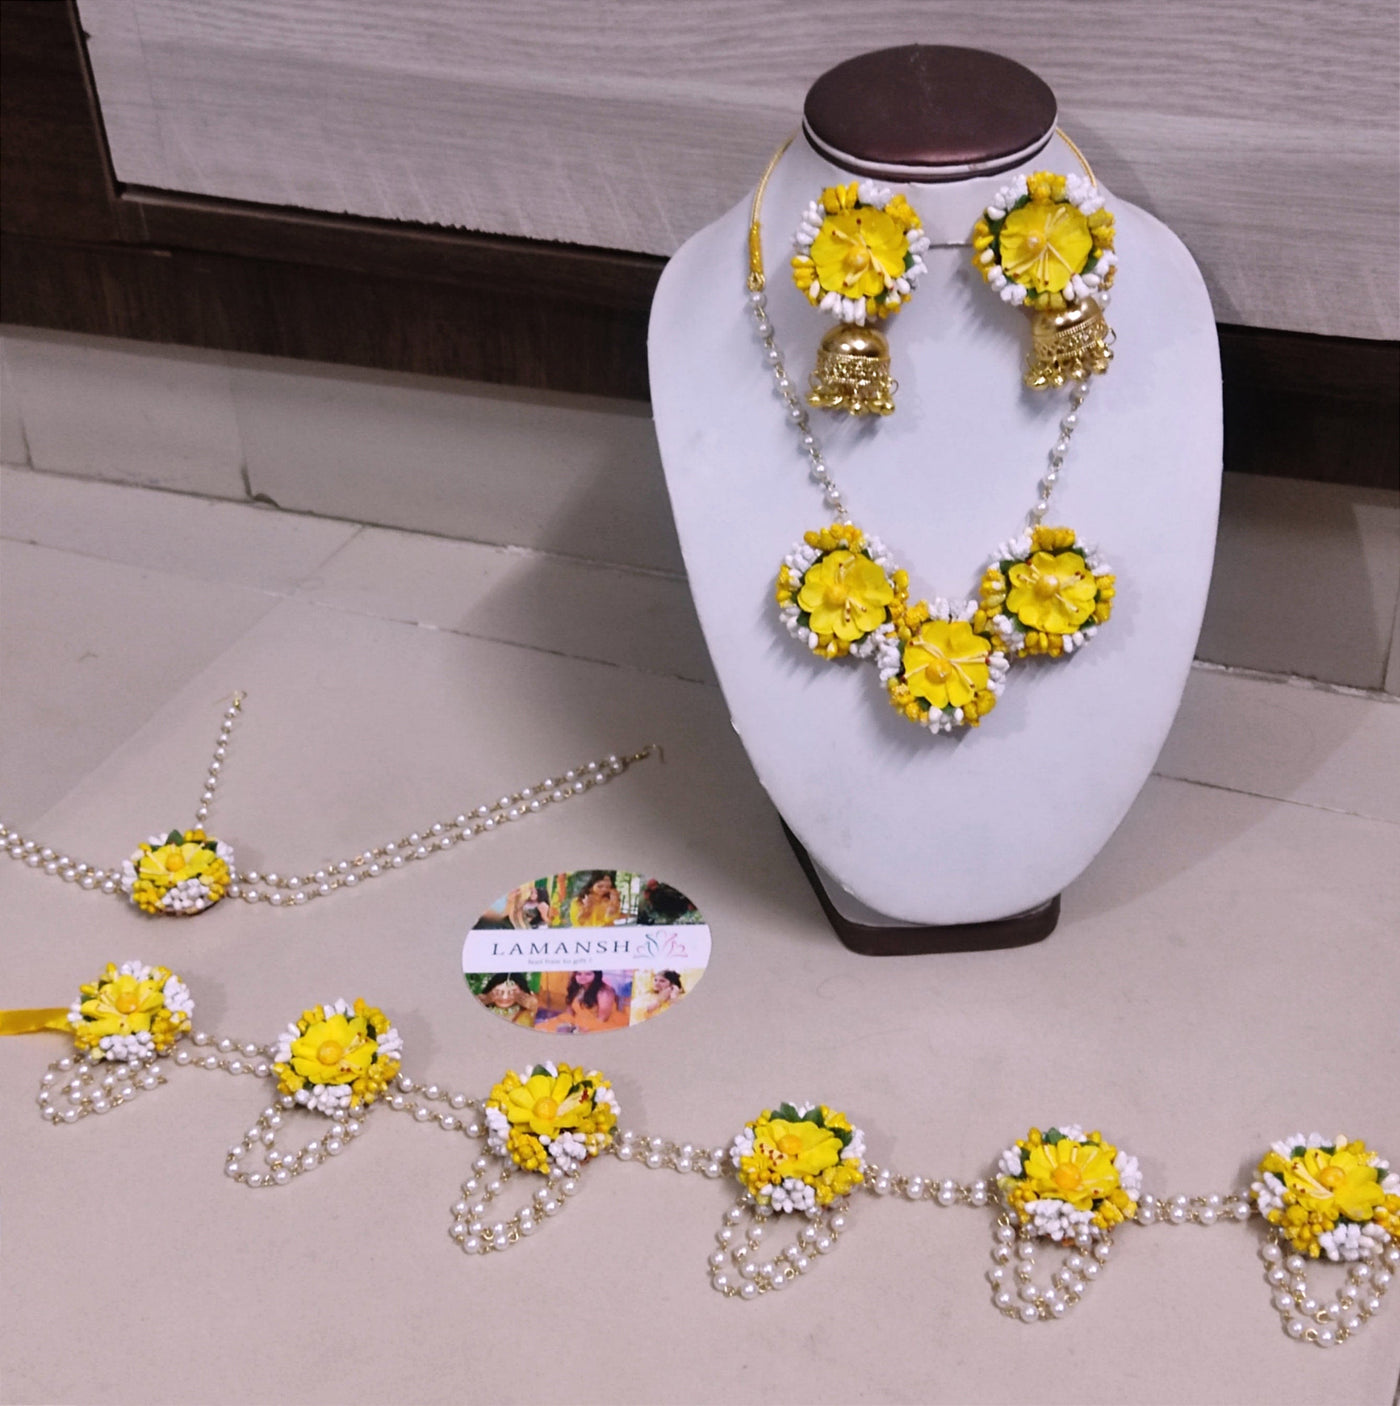 LAMANSH Flower Jewellery Yellow & White LAMANSH® Artificial Yellow White Flower 🌸 Jewellery Set with Kamarbandh for Haldi - Mehendi ceremony / Floral set for Dohle devan function with waistbelt